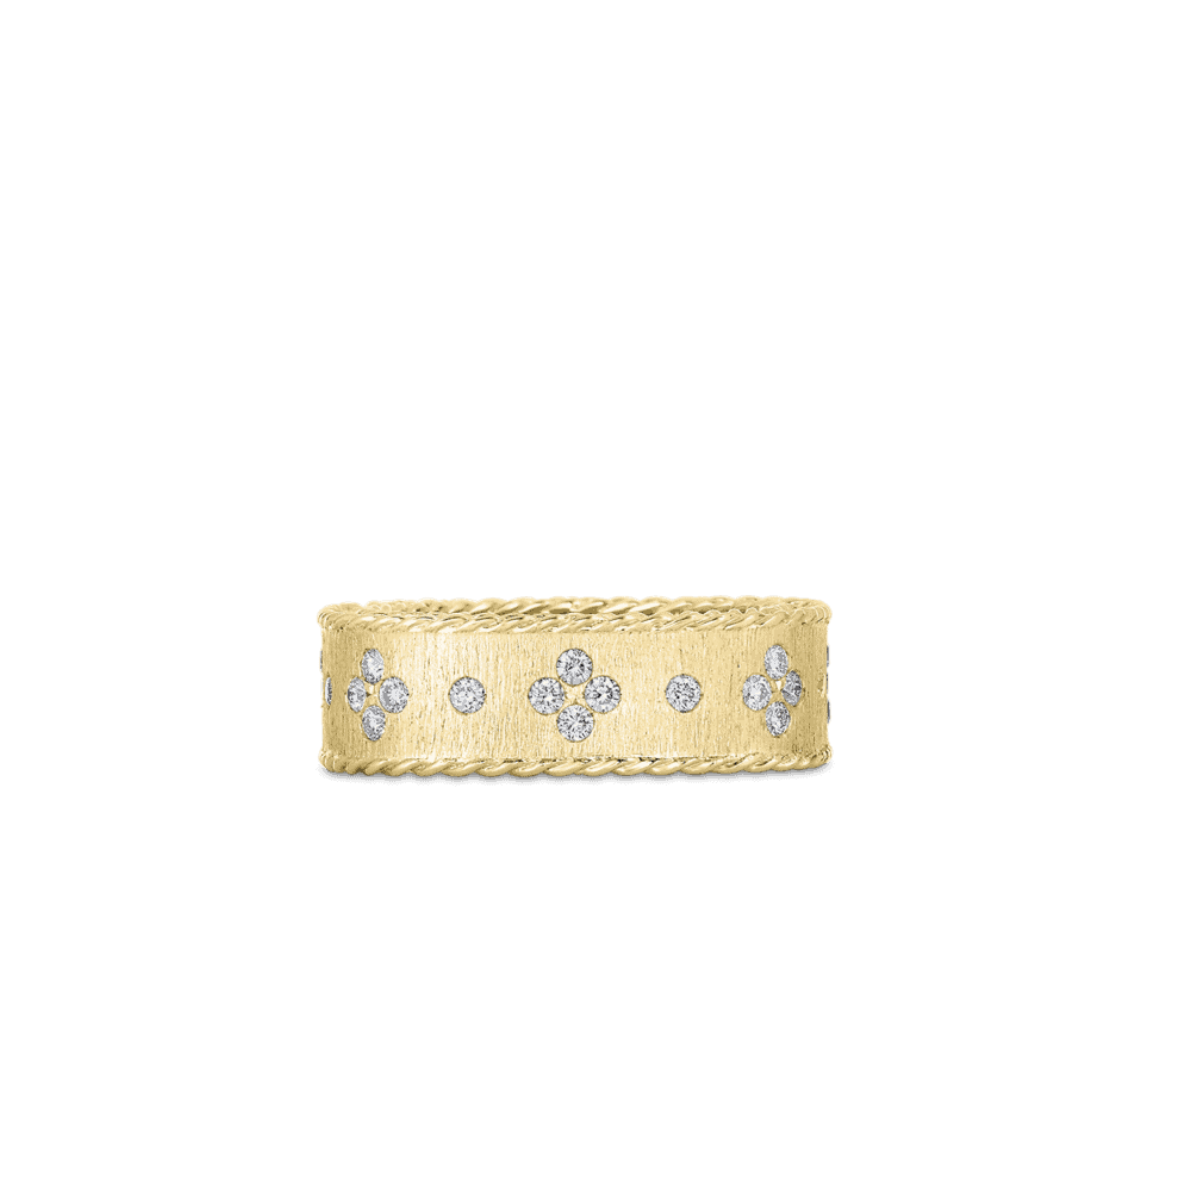 Princess Satin Fleur de Lis Diamond Square Ring in 18kt Yellow Gold